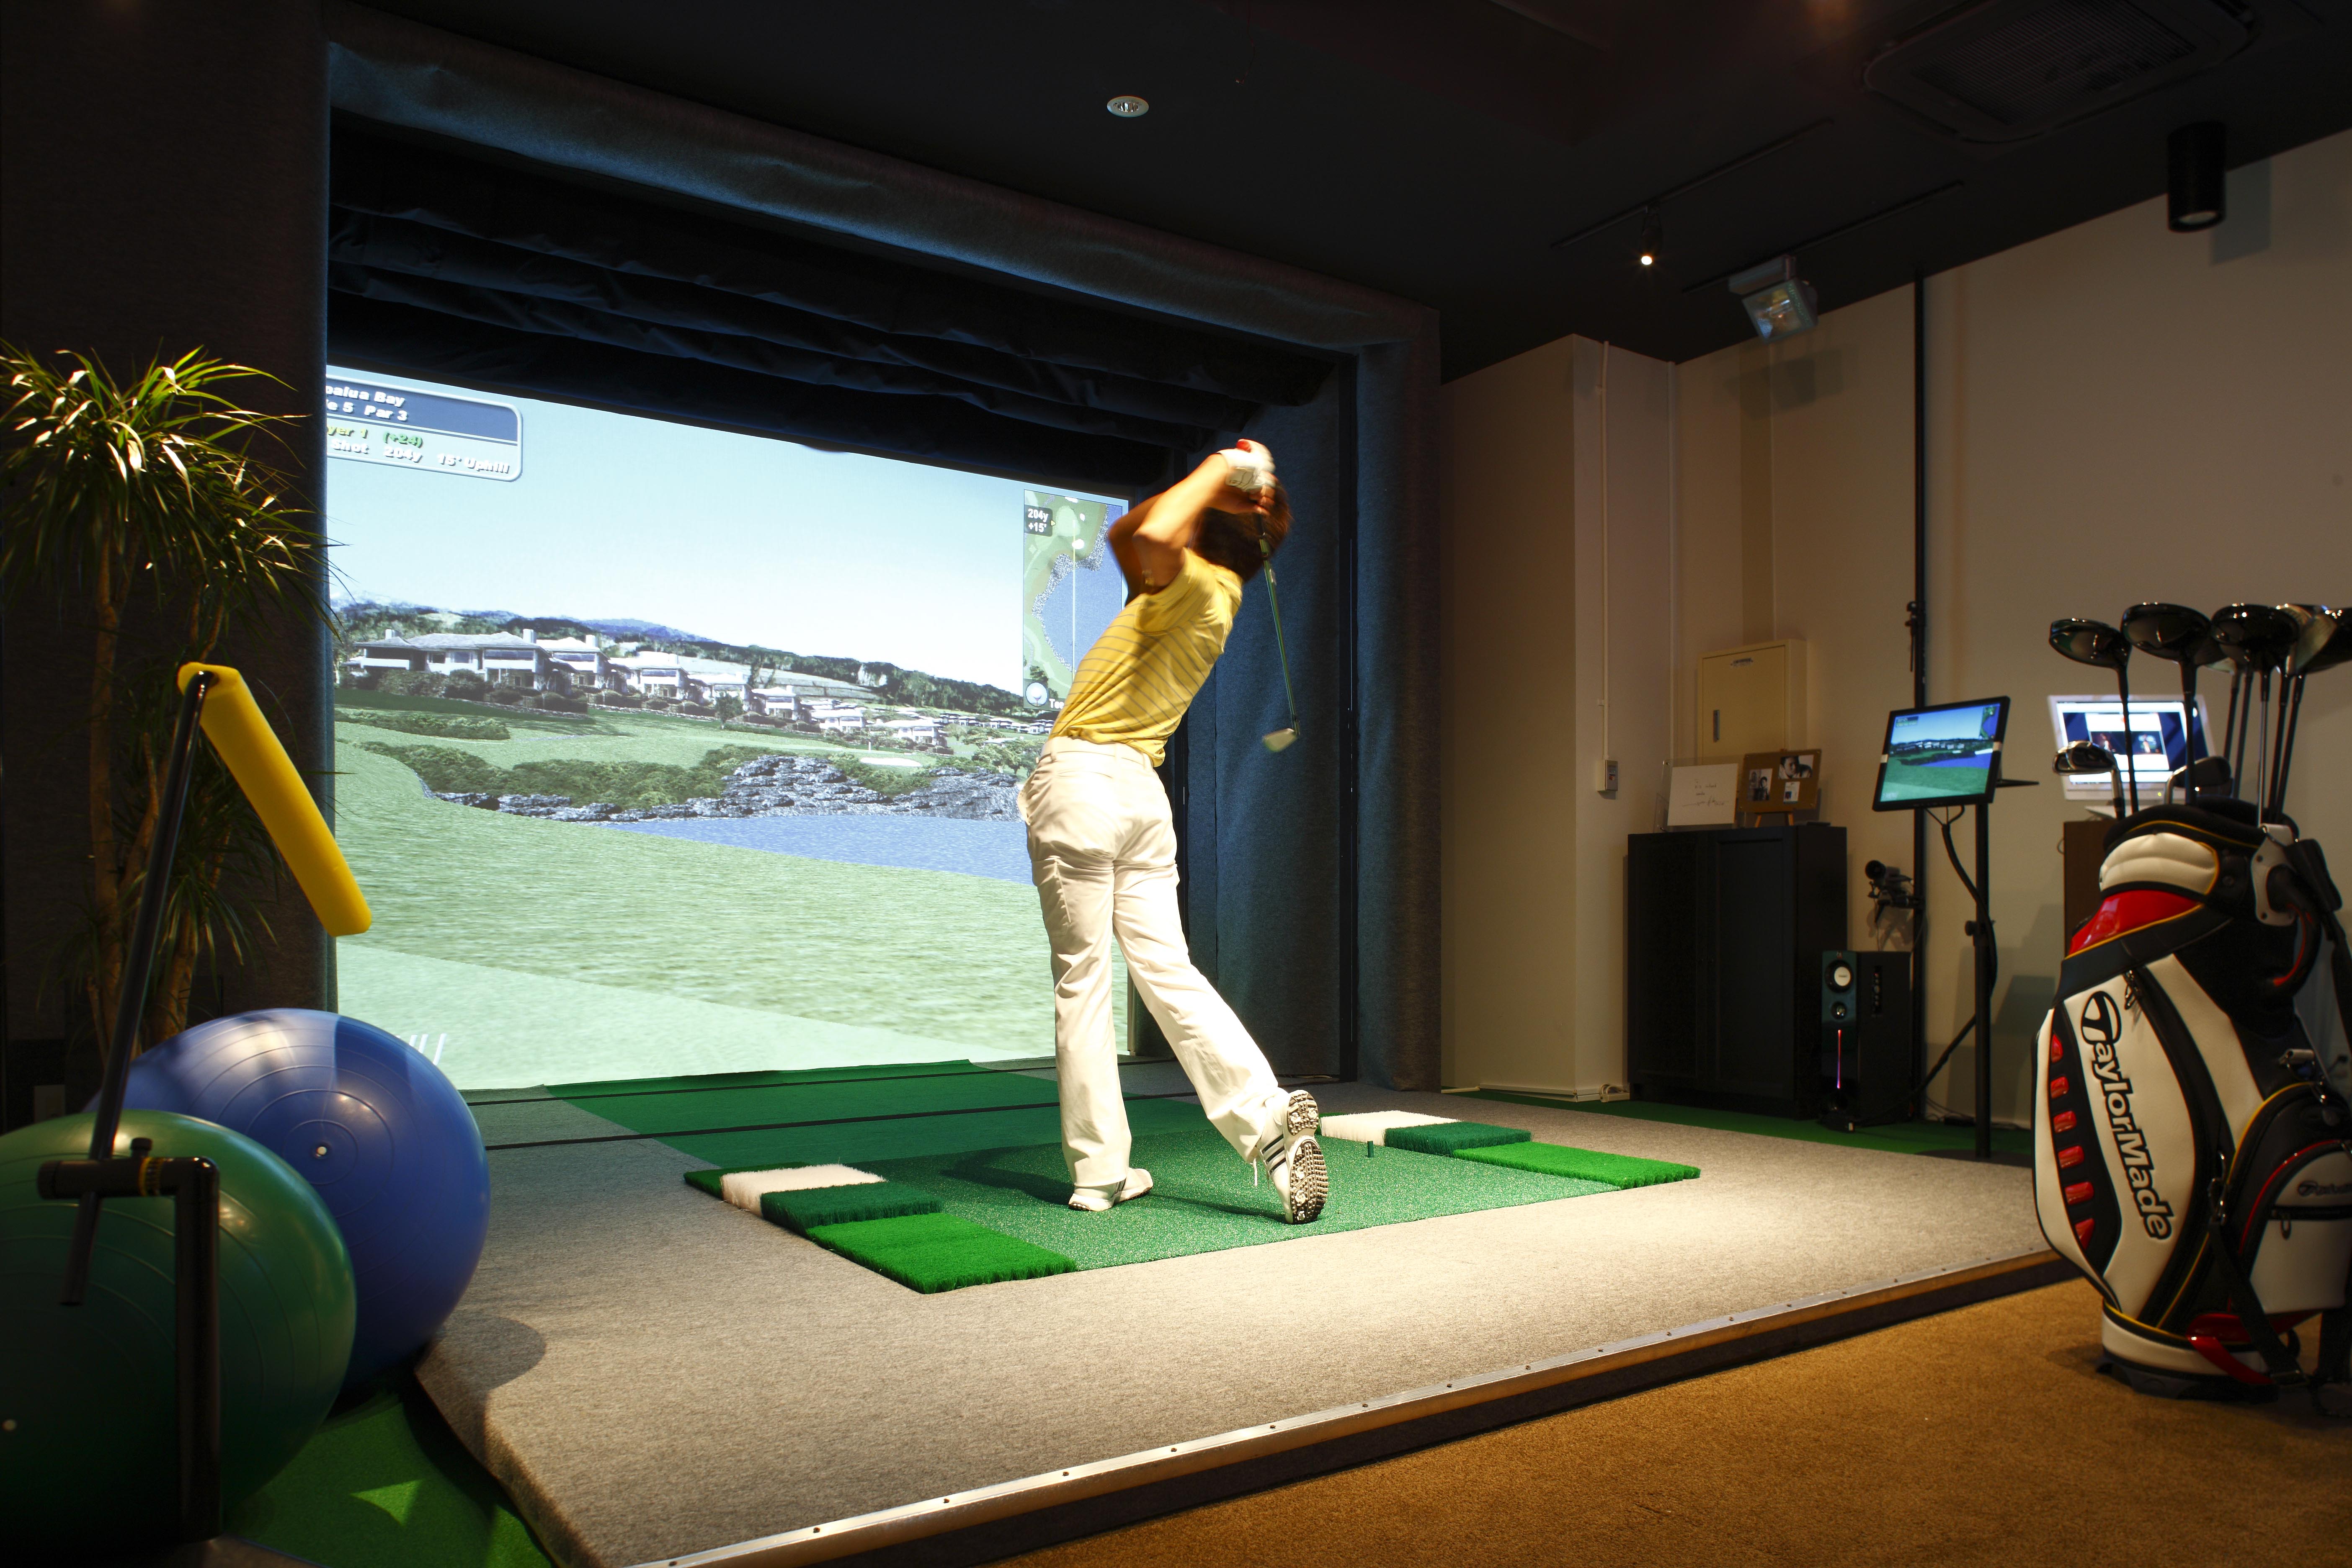 The Full Swing Golf simulator